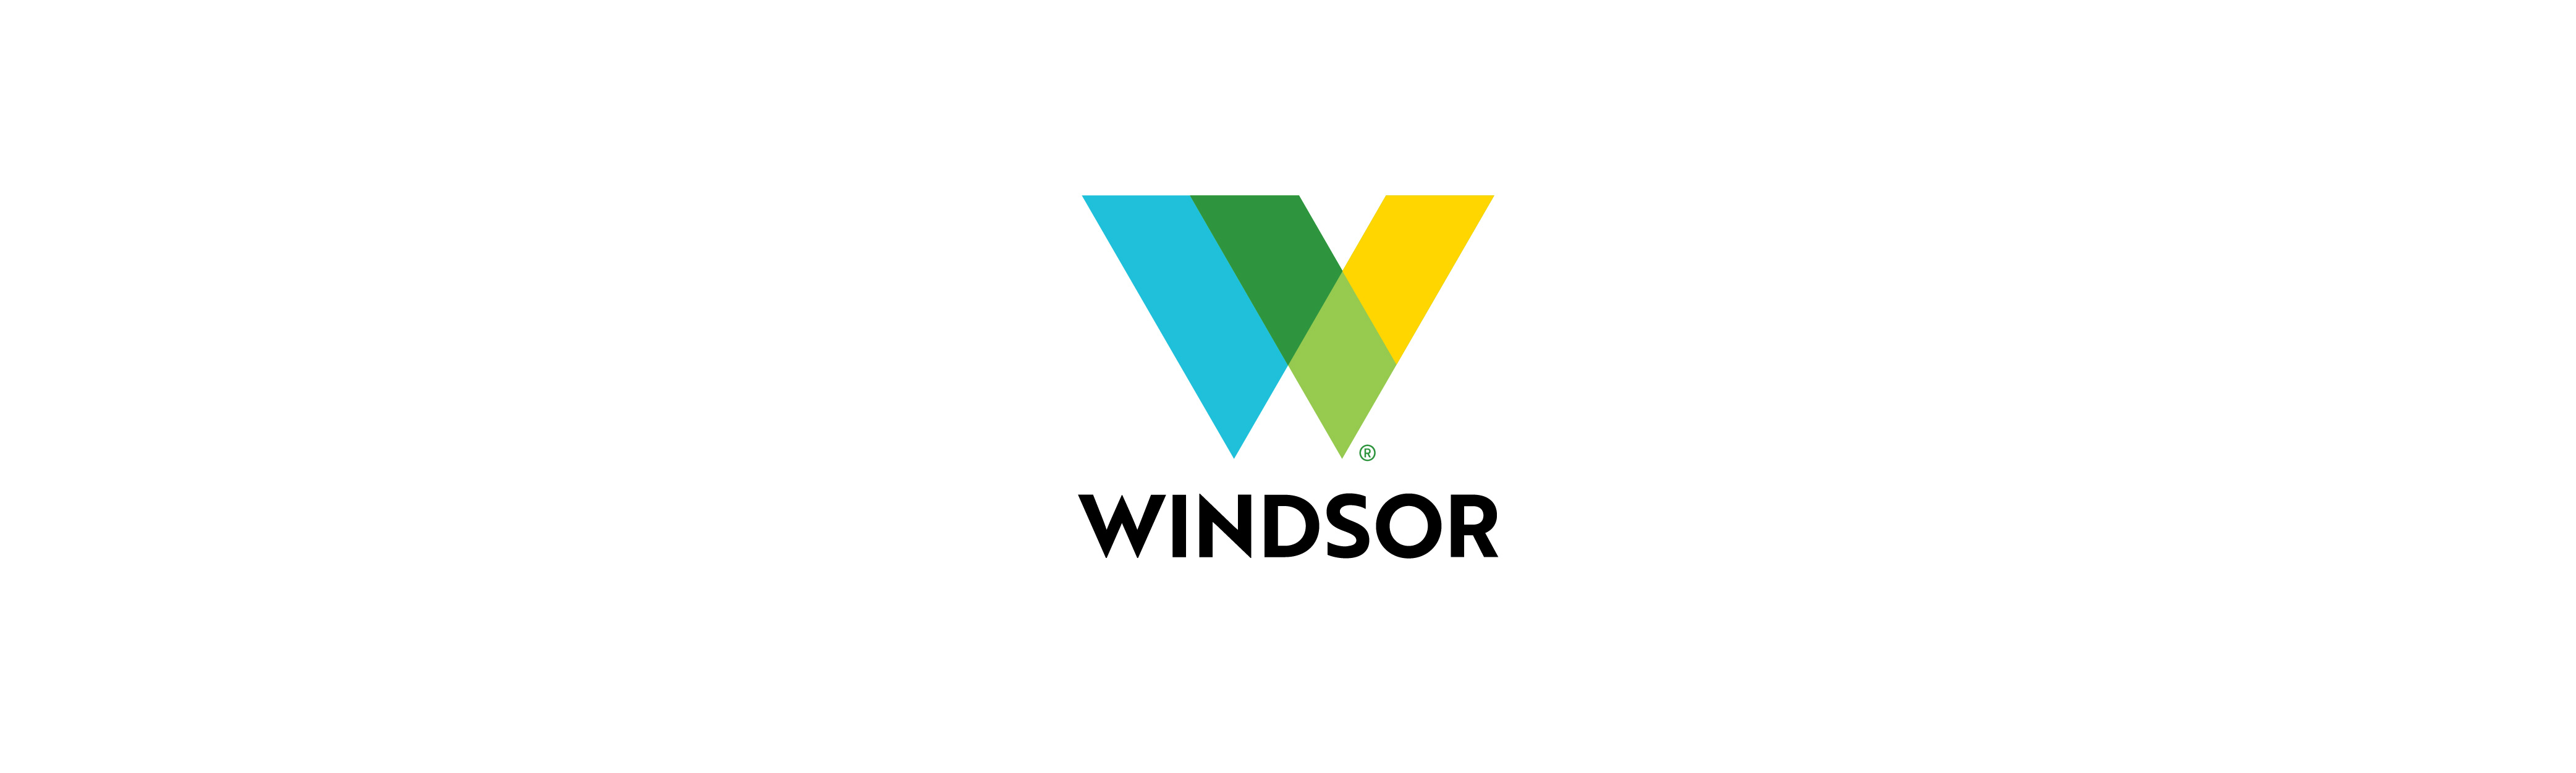 Windsor logos